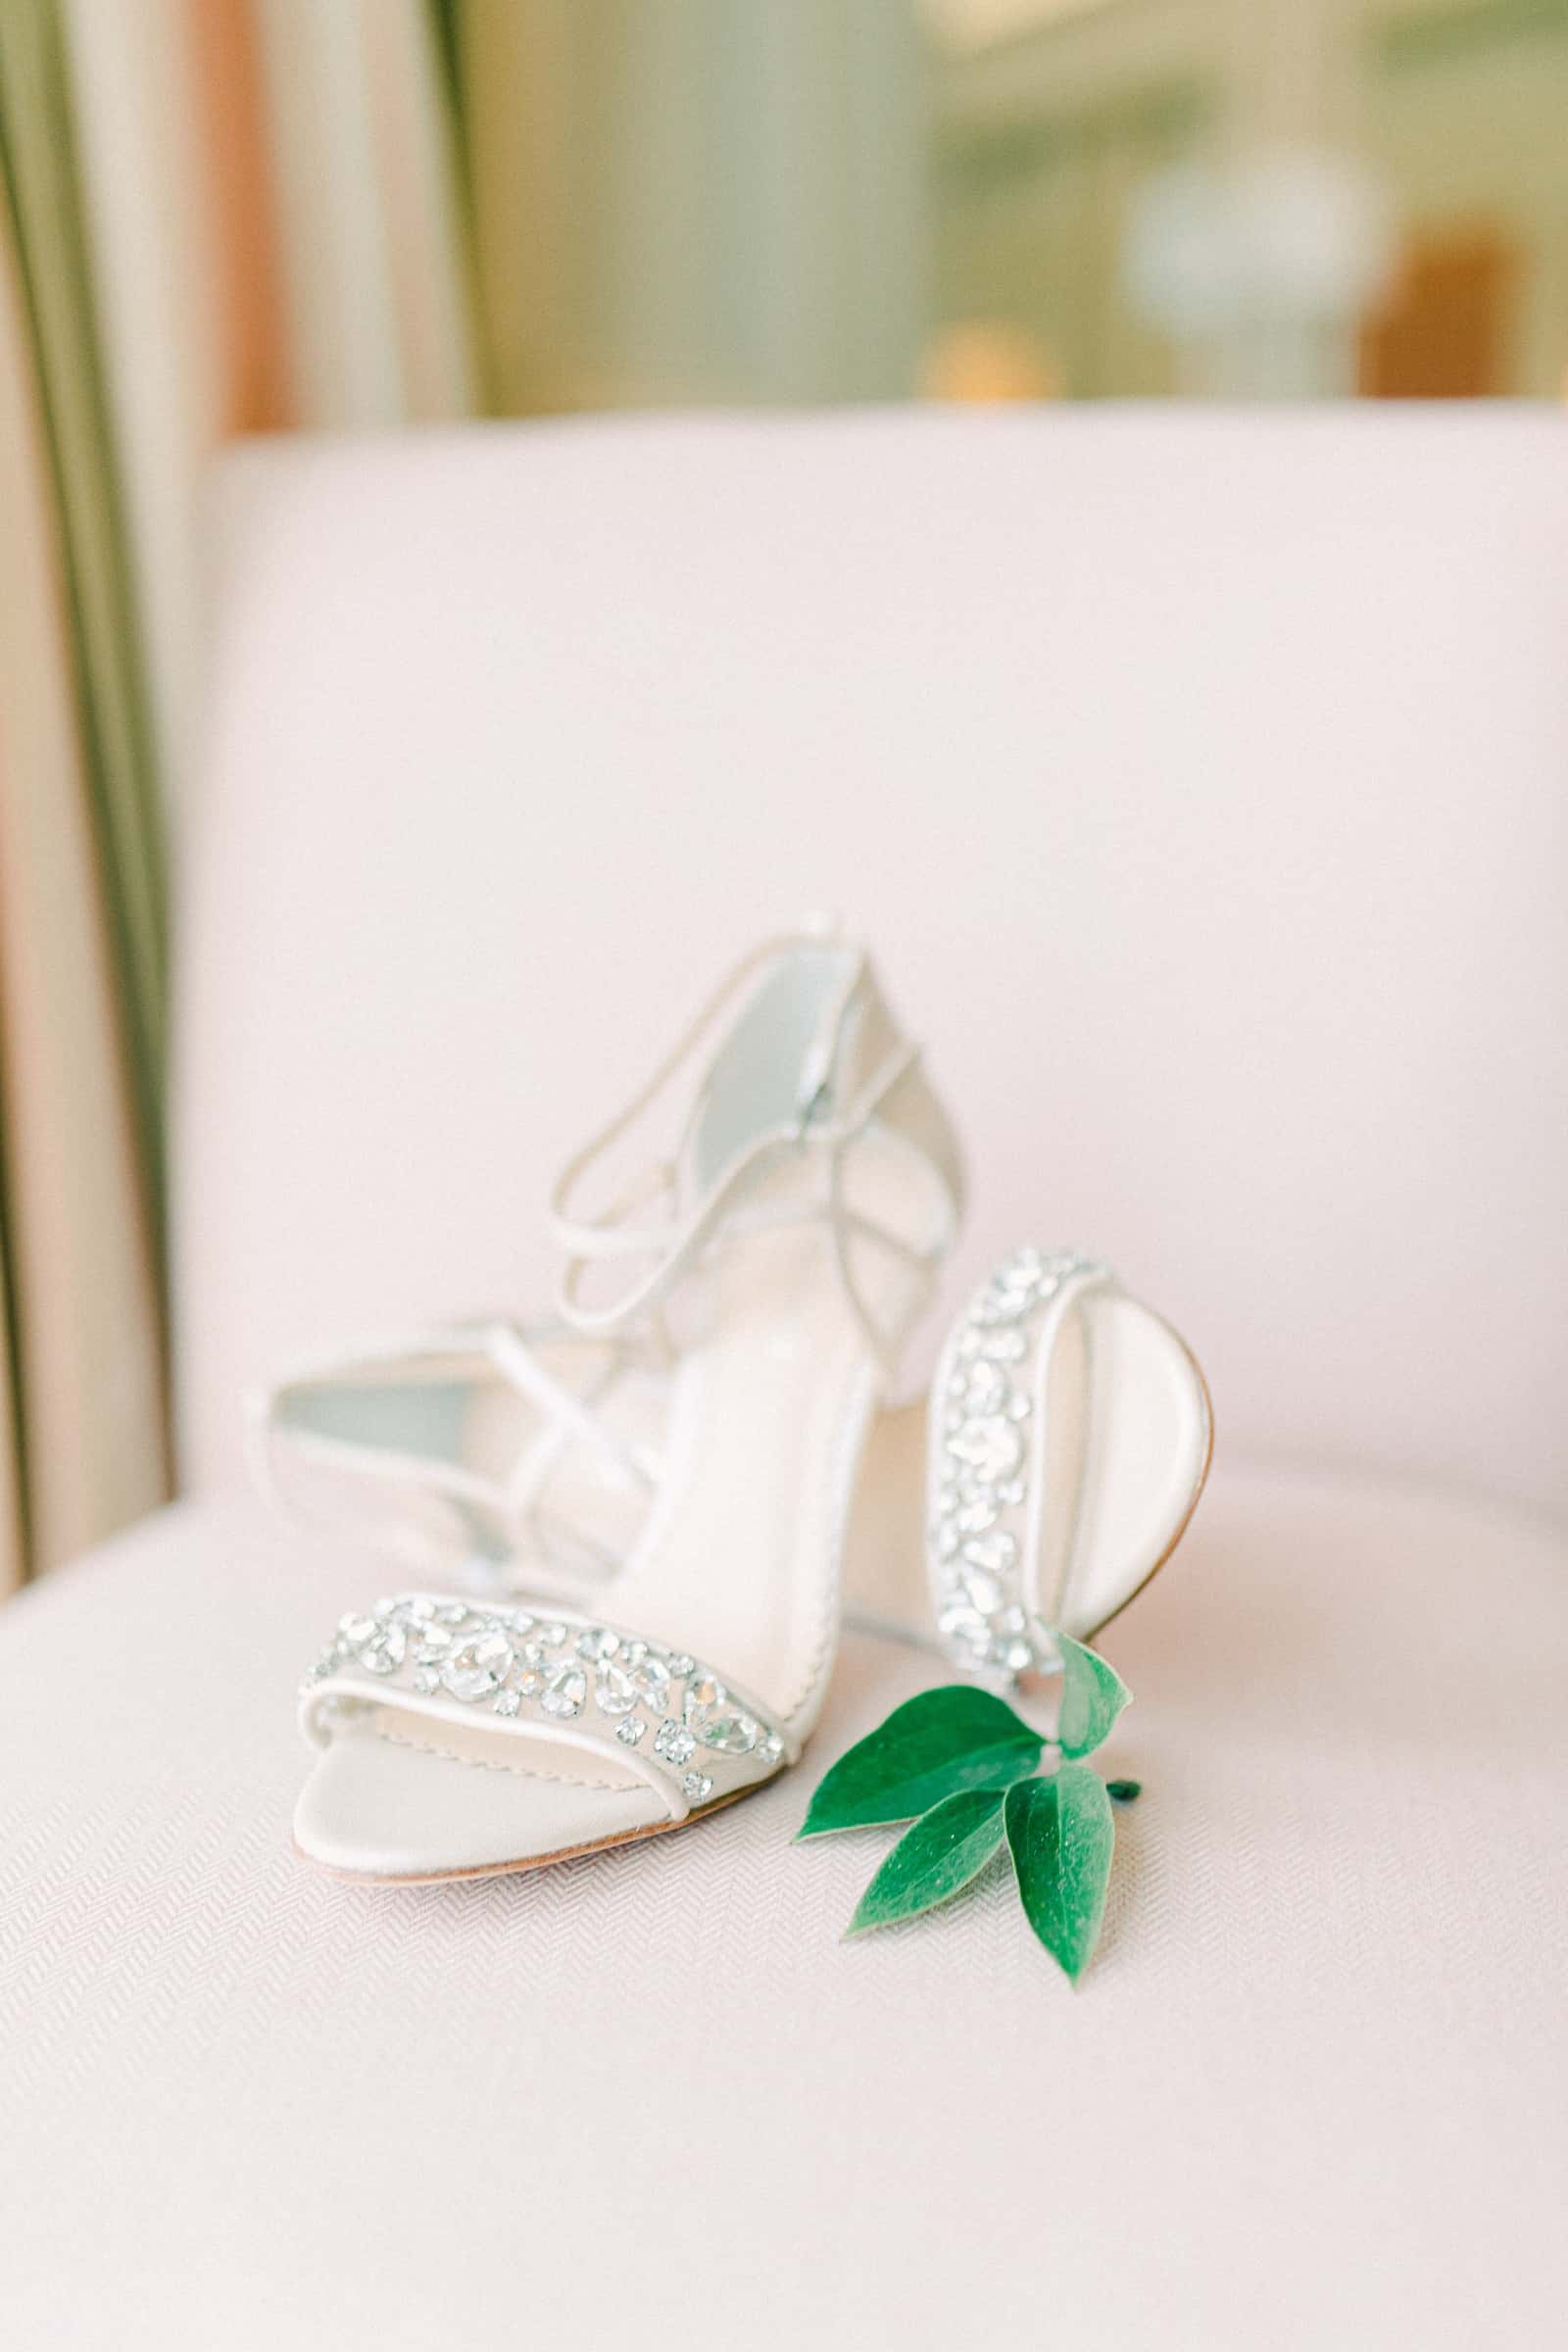 Jeweled bride's wedding shoes